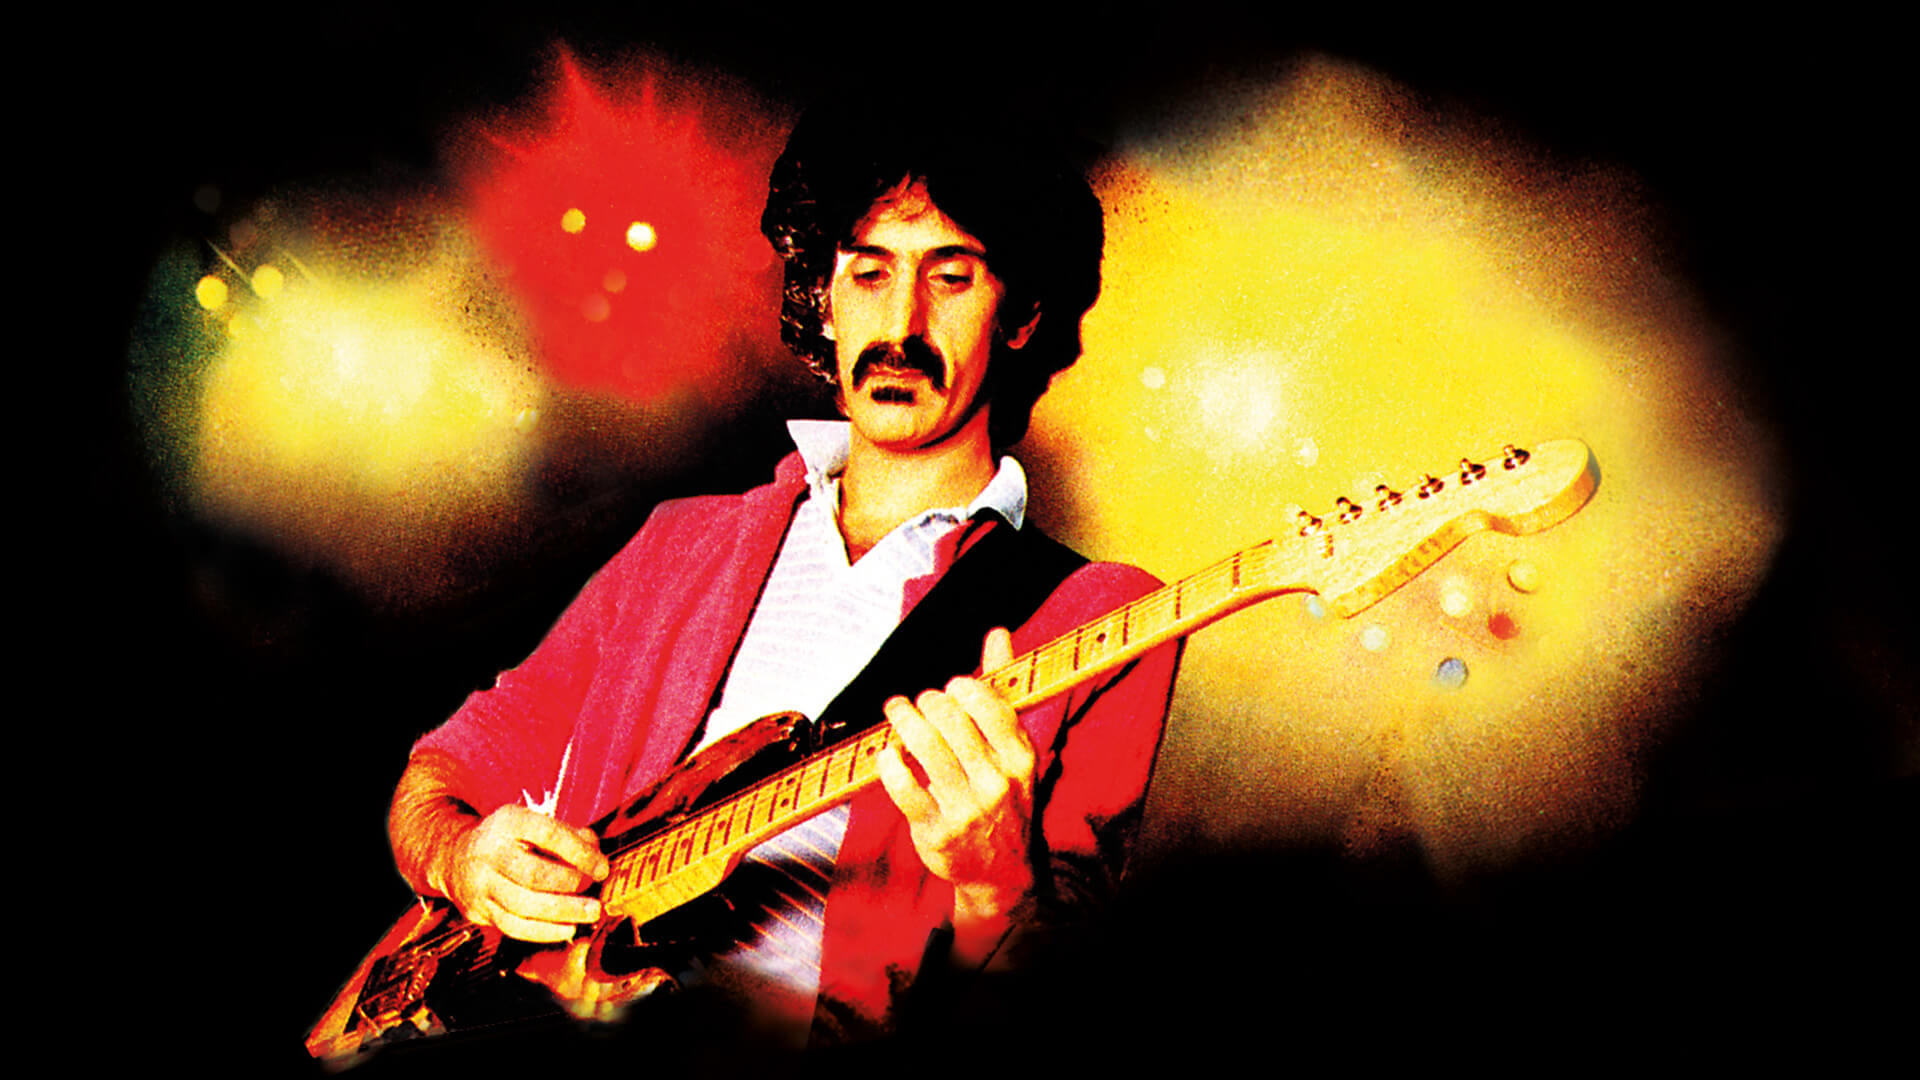 Frank Zappa will also gain a hologram tour in a near future